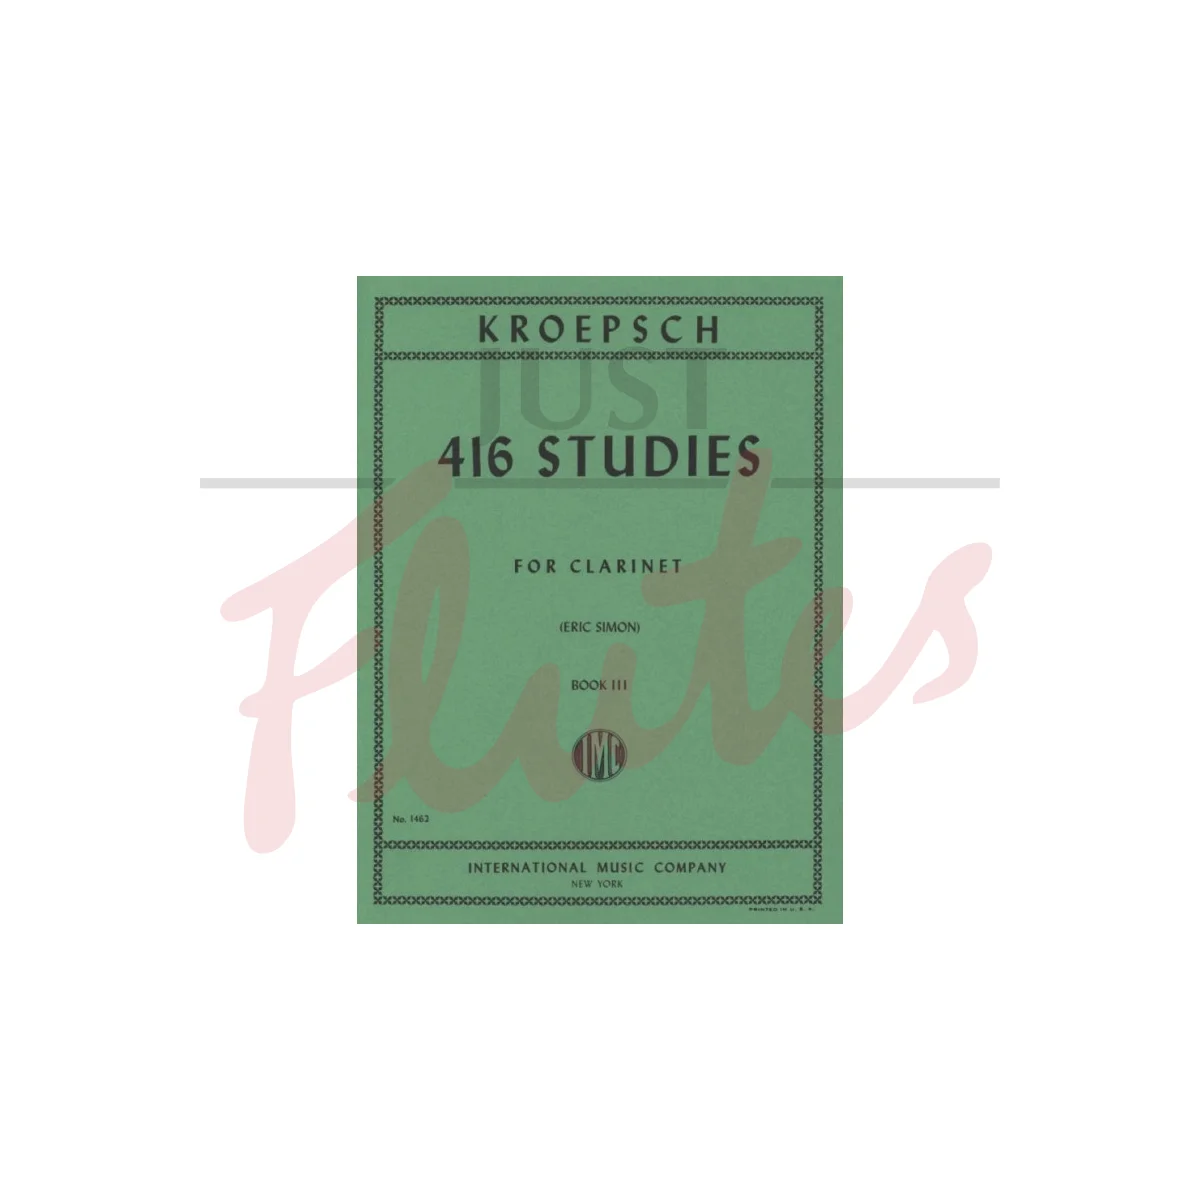 416 Studies for Clarinet, Vol. 3